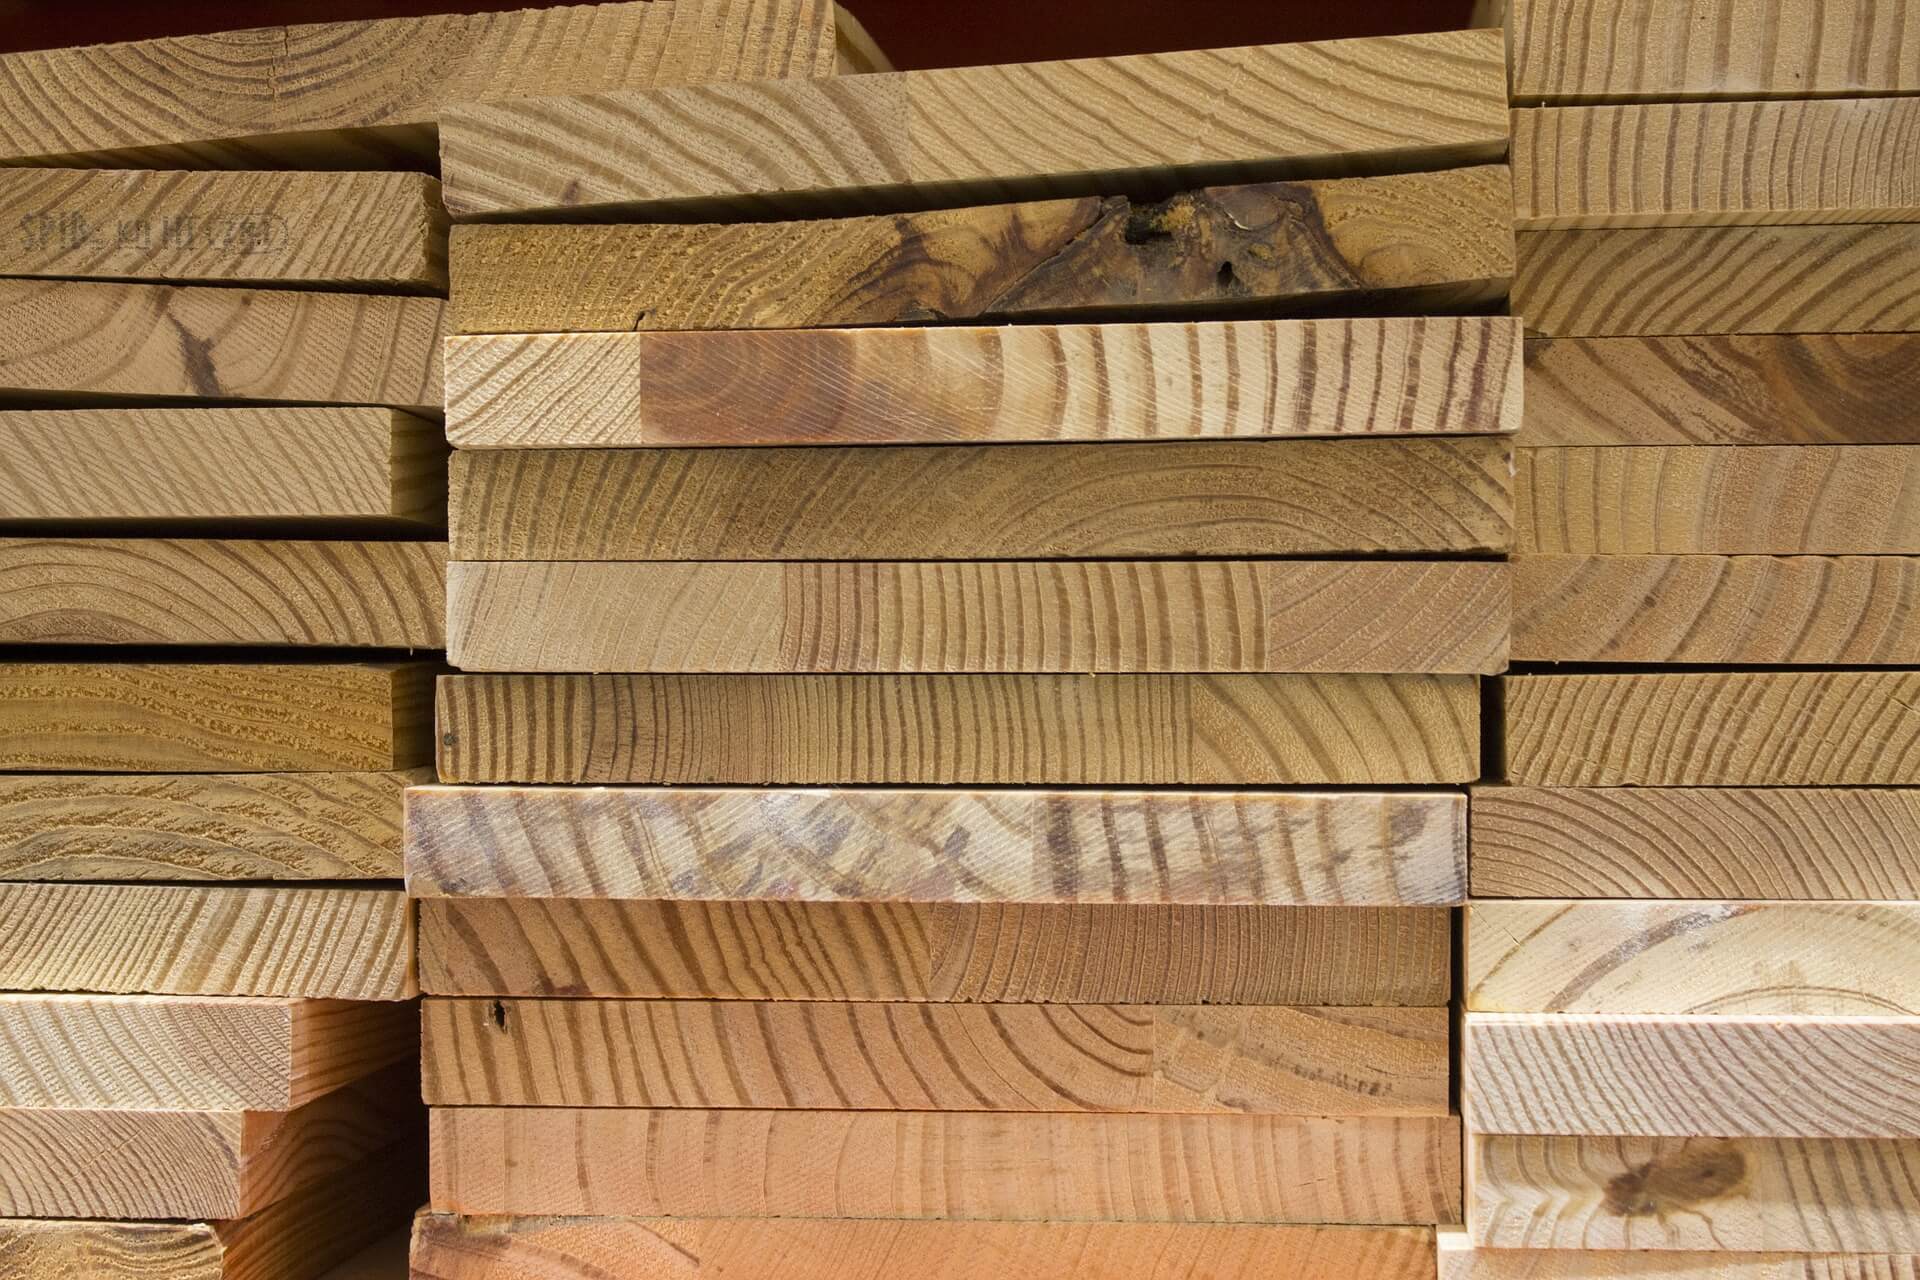 lumber, how to build a garden box